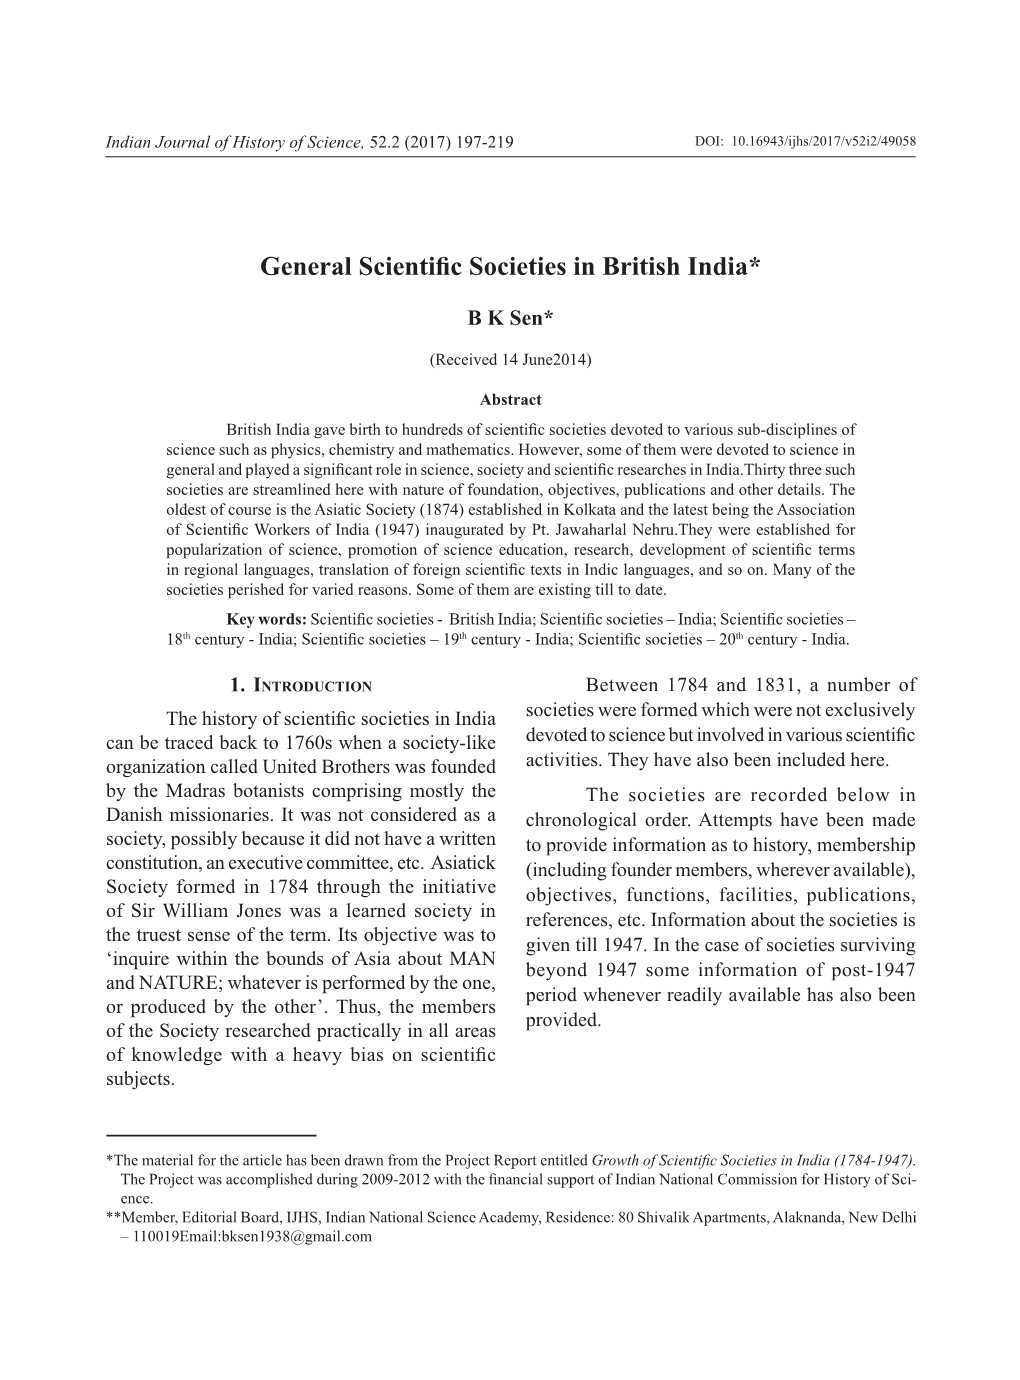 Historical Note: General Scientific Societies in British India 199